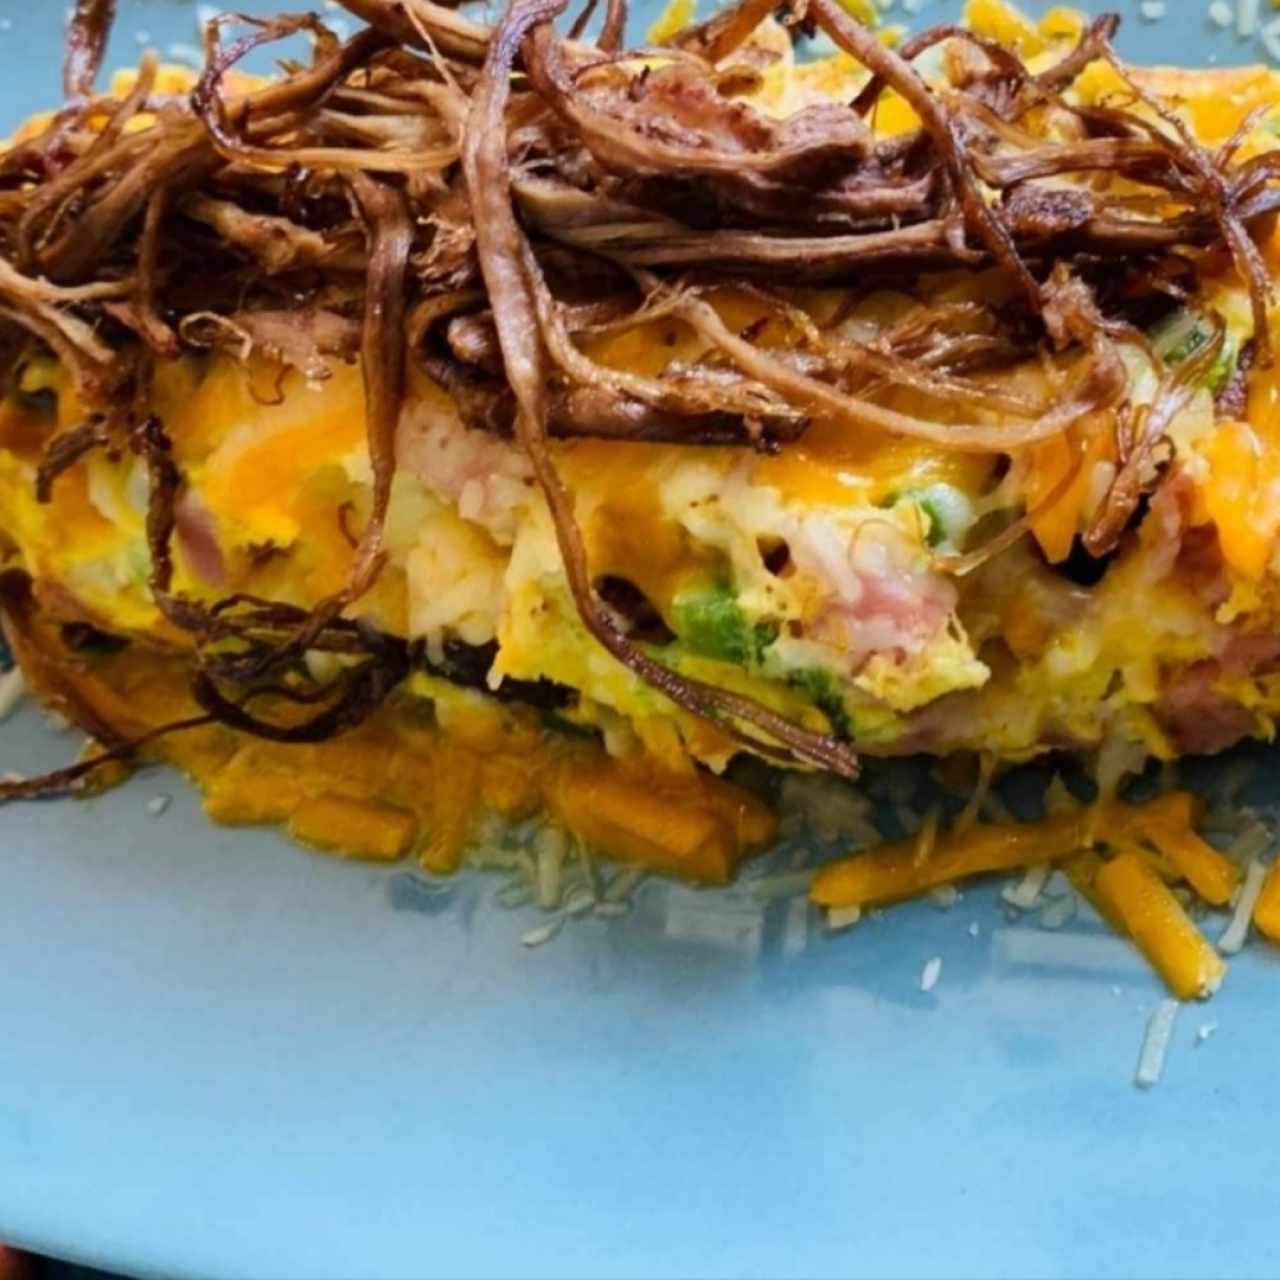 Colorado omelet